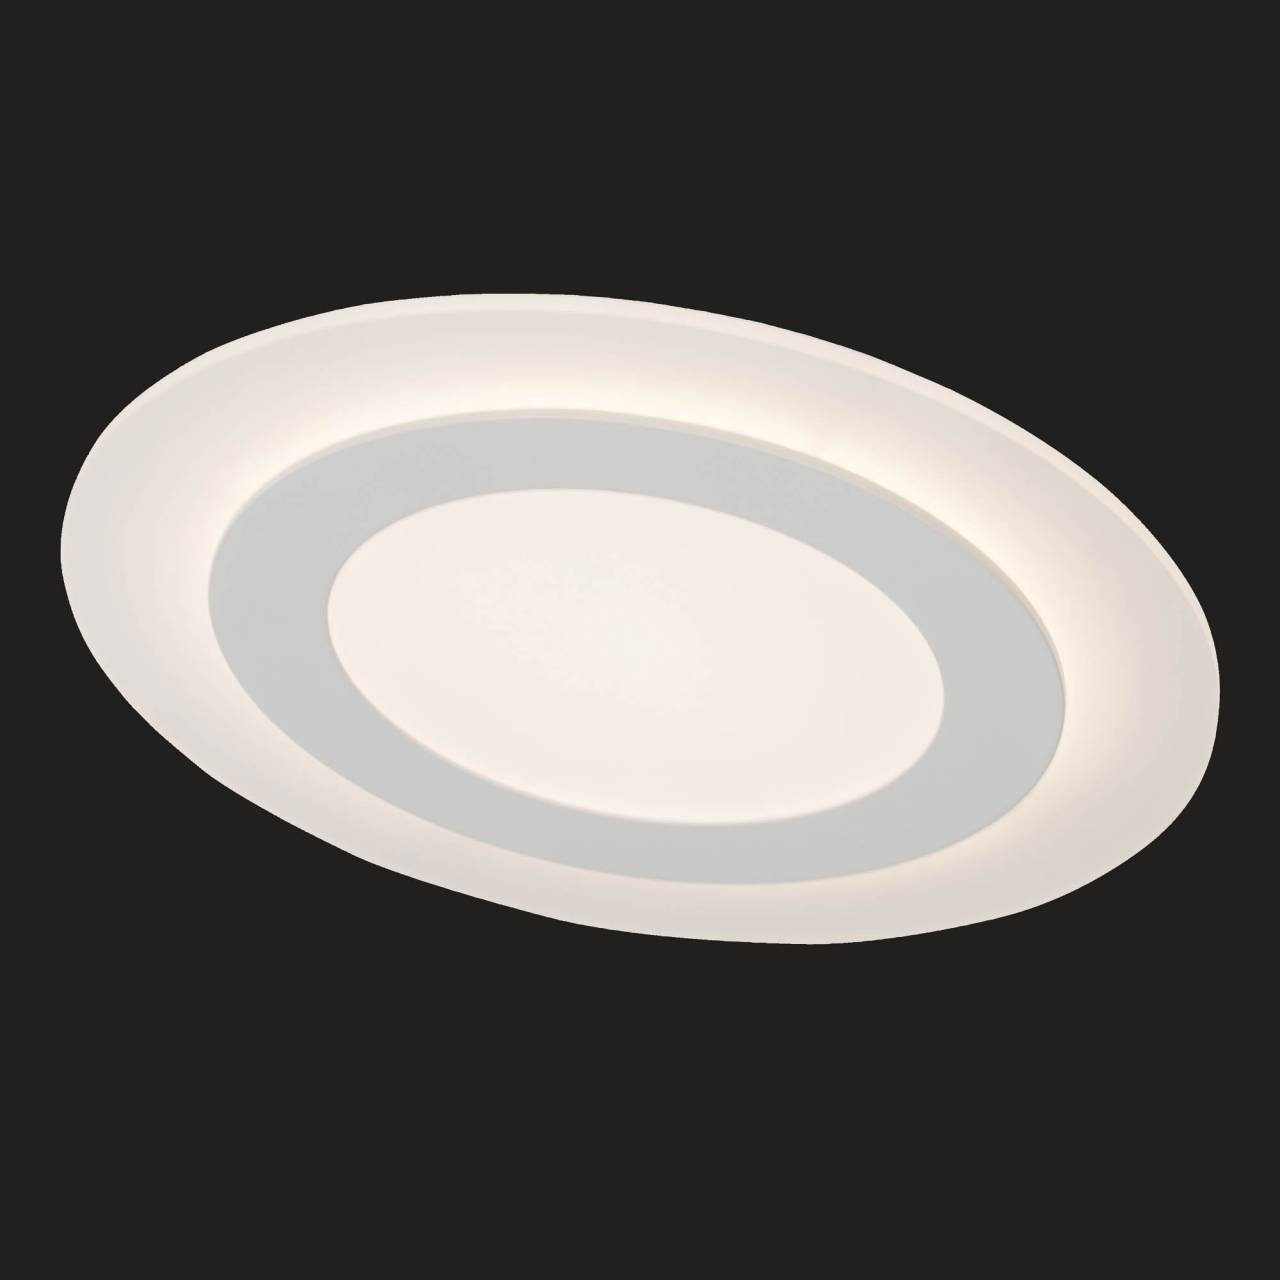 AEG LED warmweiß, Aluminium/Acryl, LED lm, 35 Deckenleuchte cm, Warmweiß, Ø weiß wechselbar, Karia, 2800 dimmbar